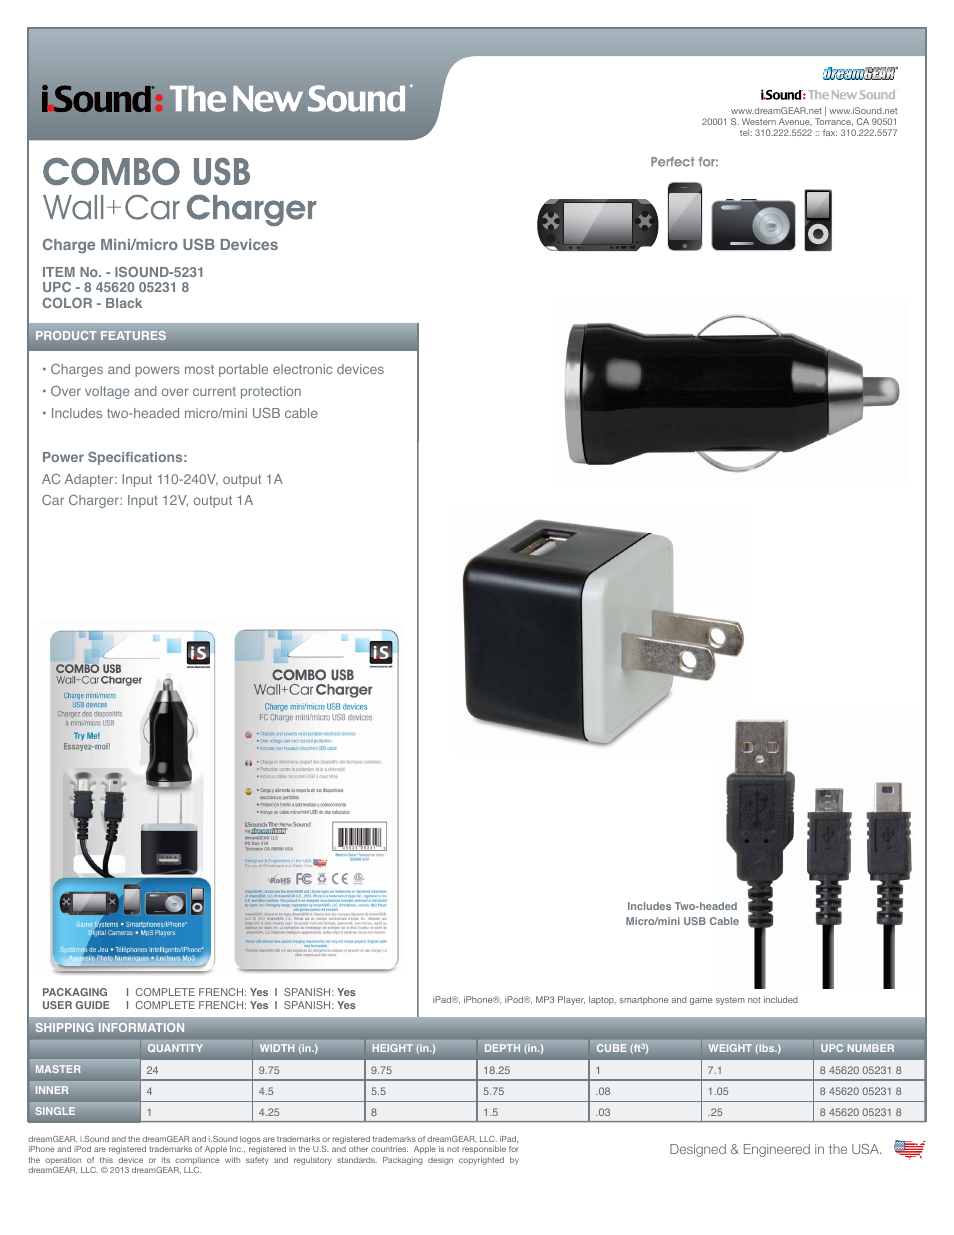 Combo USB Wall + Car Charger - Sell Sheet